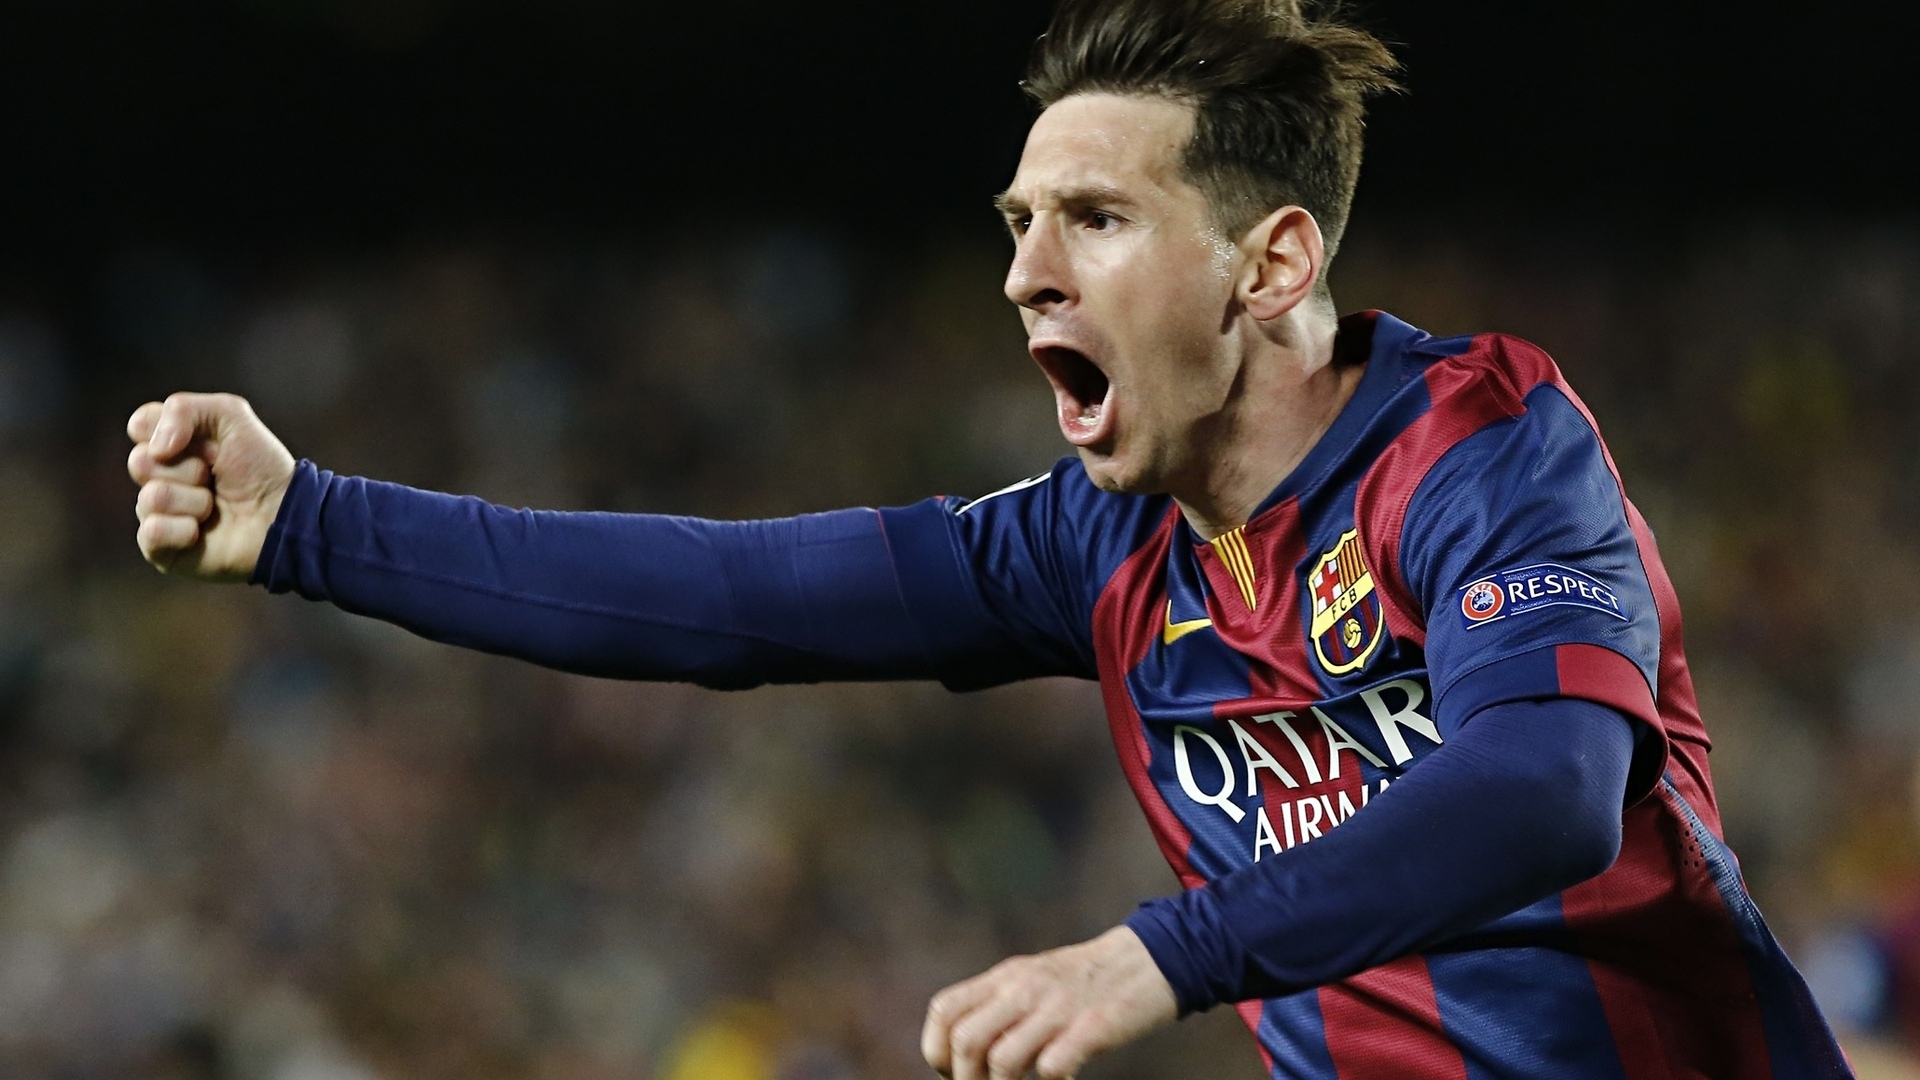 Lionel Messi Celebrating for 1920 x 1080 HDTV 1080p resolution